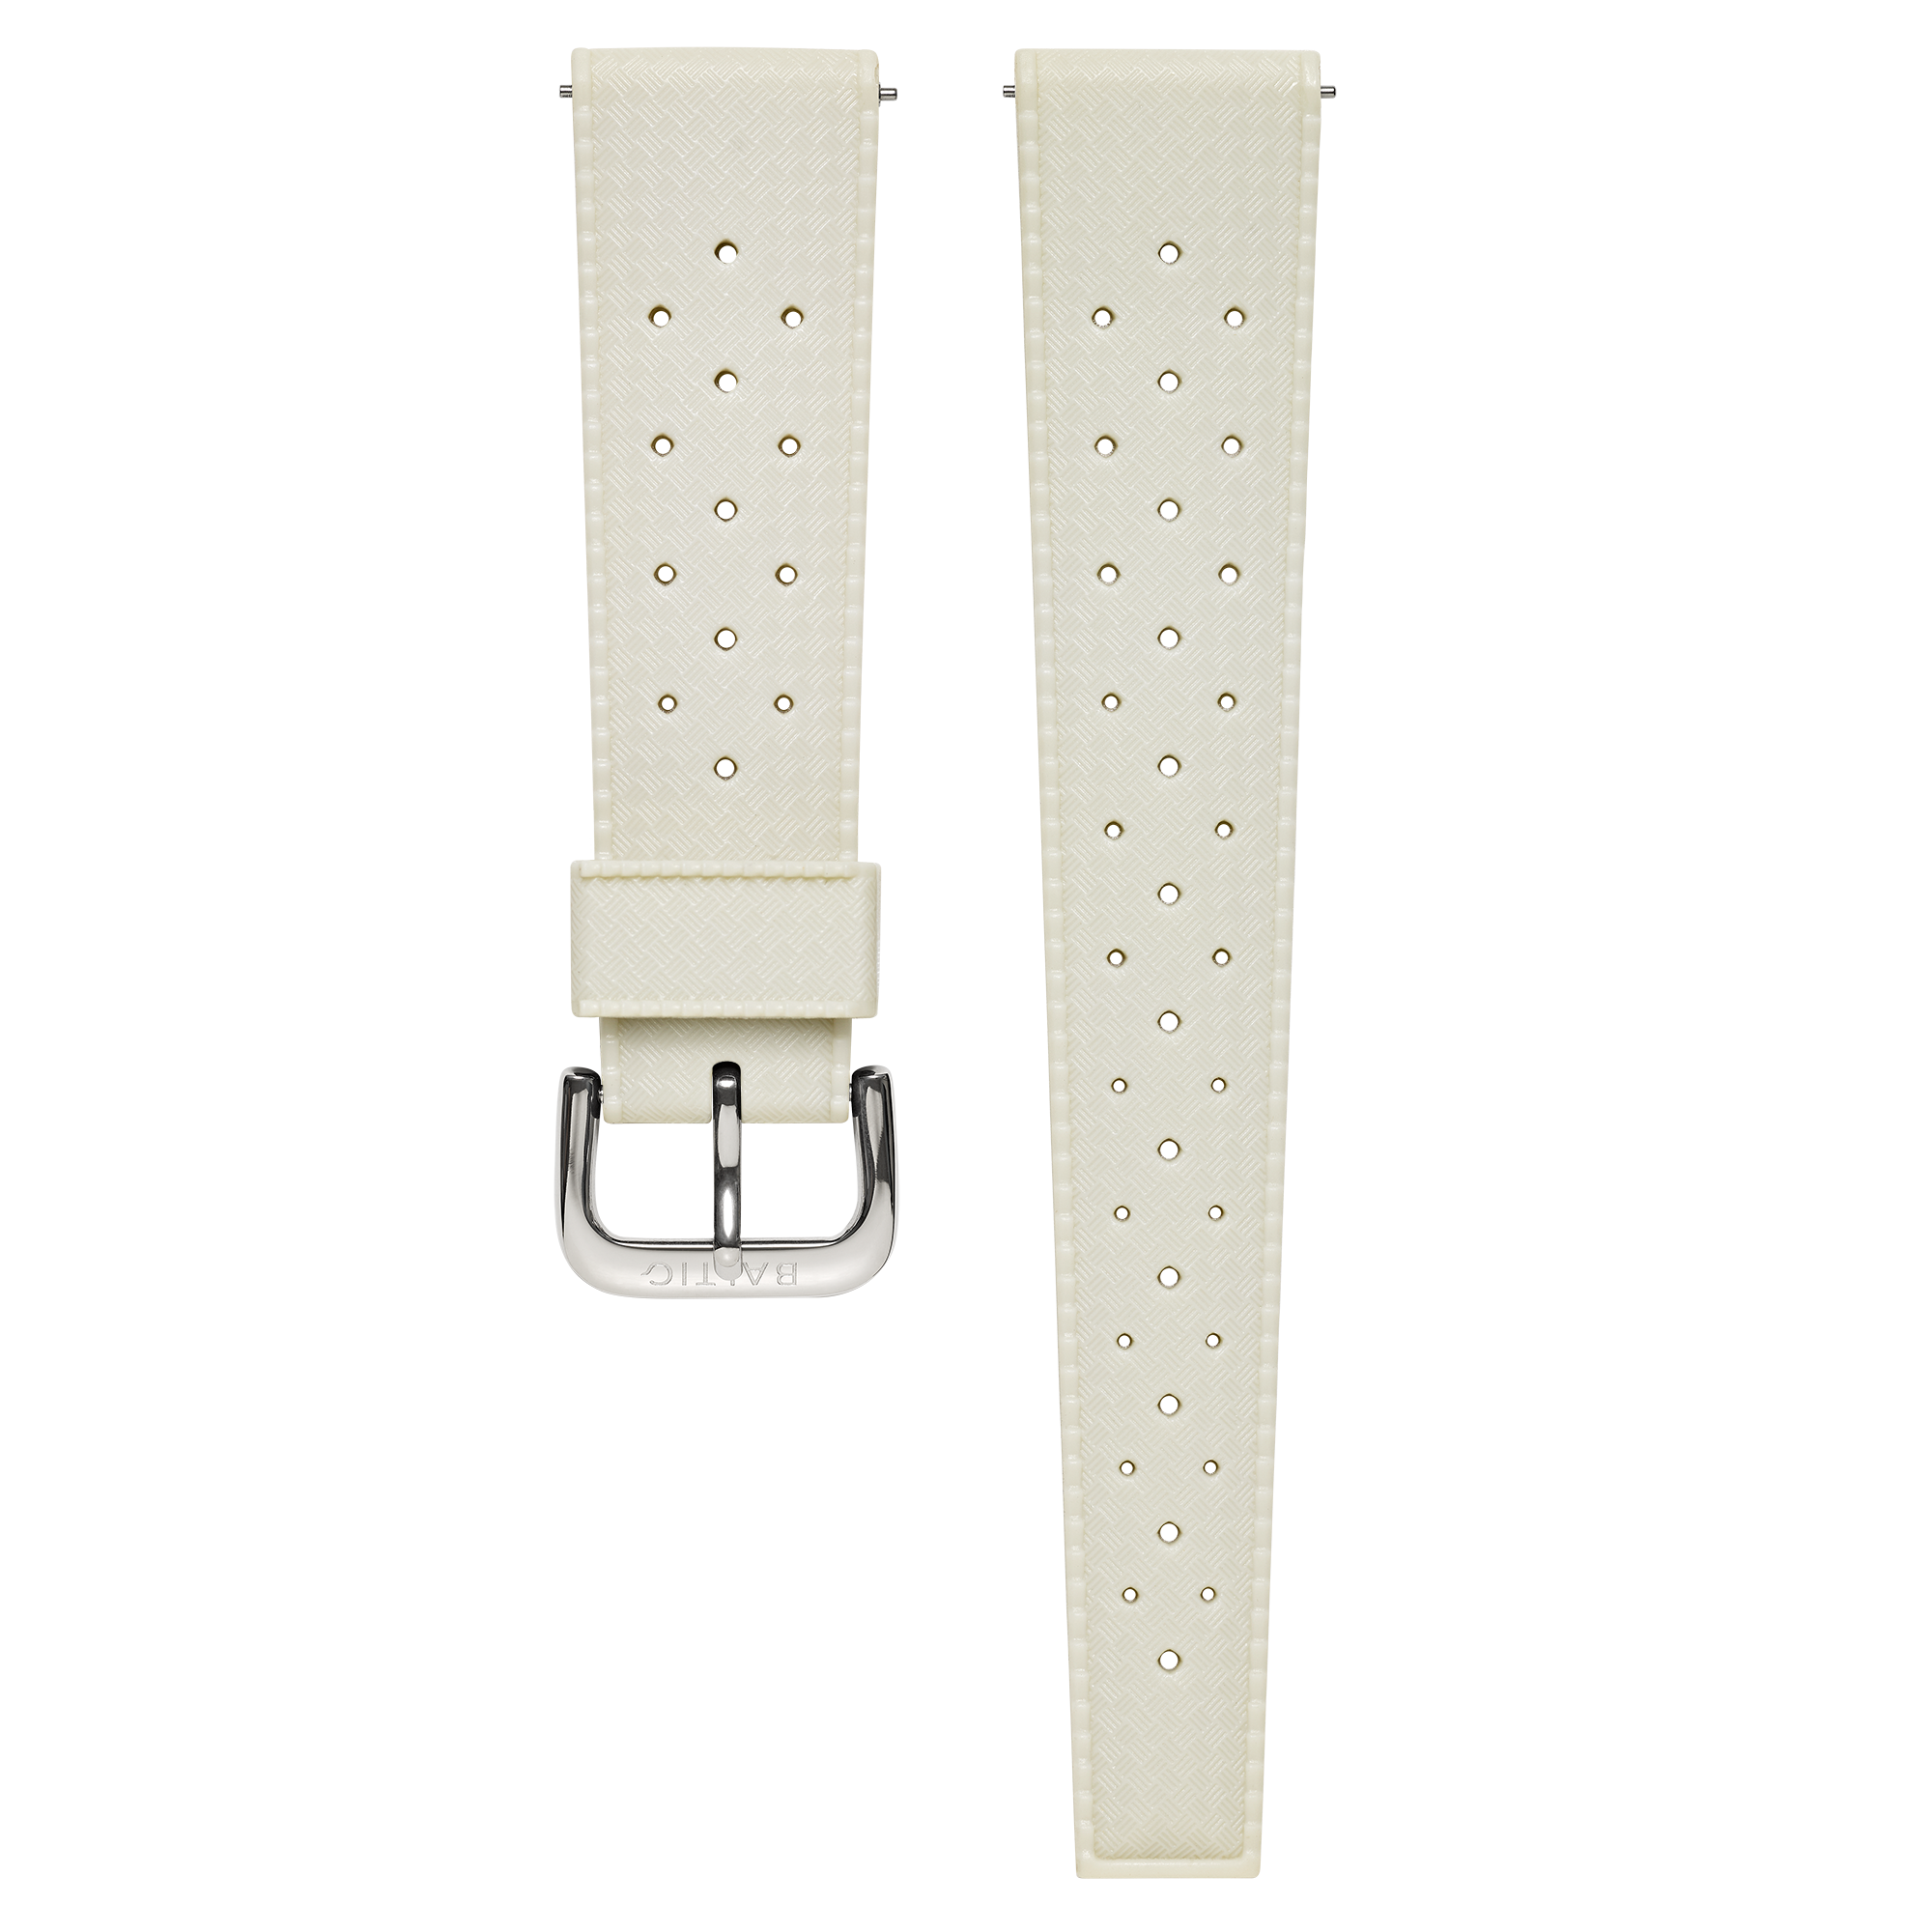 Tropic strap - White